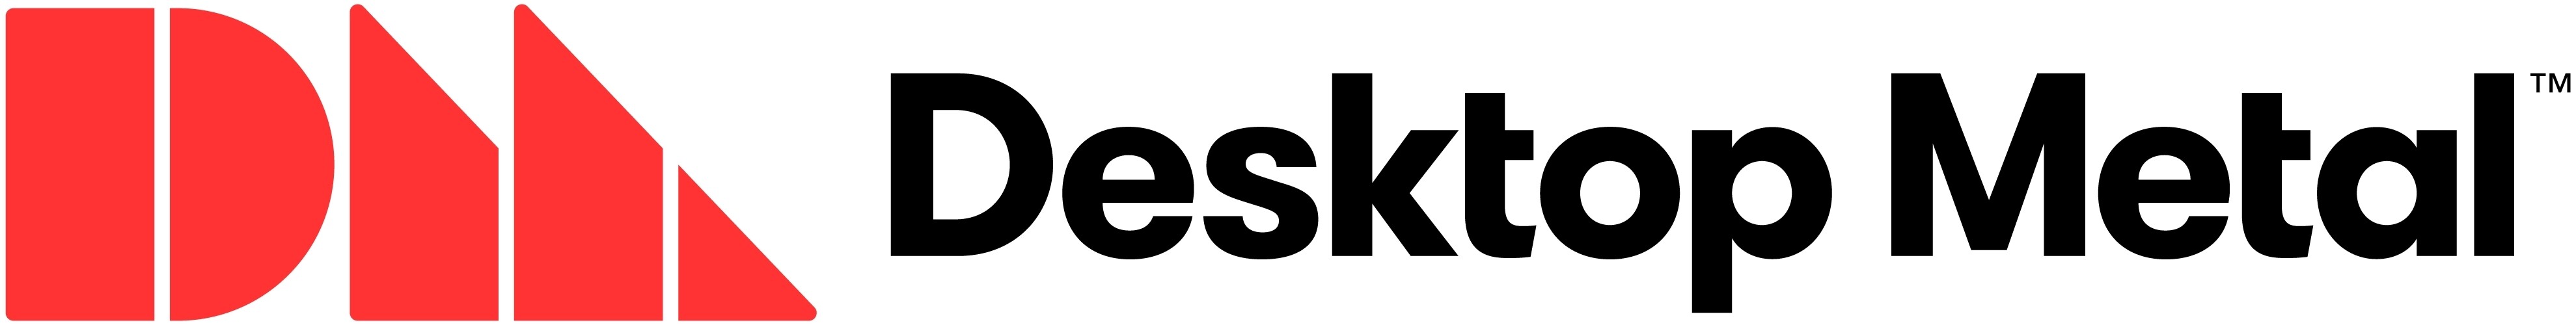 desktopmetal-logo-2.jpg